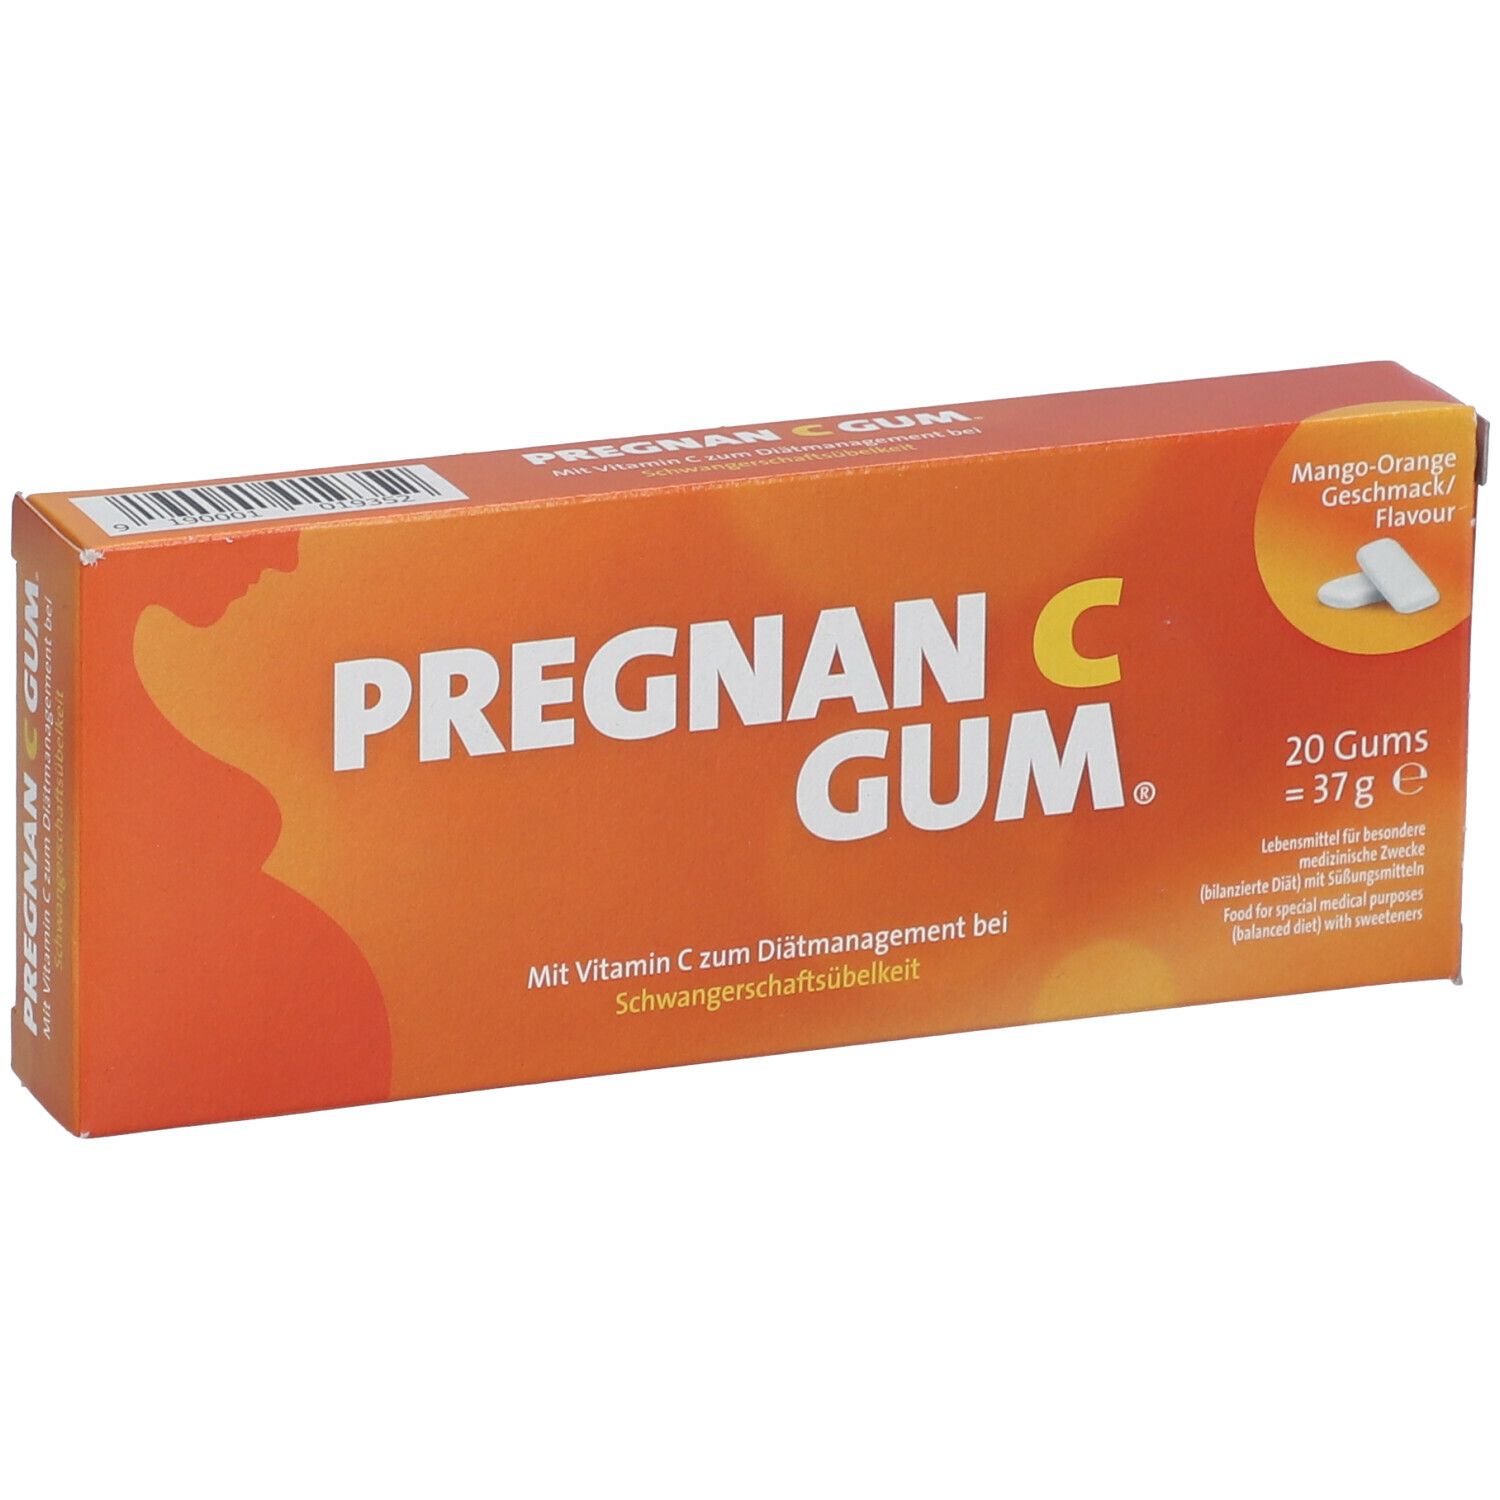 PREGNAN C GUM